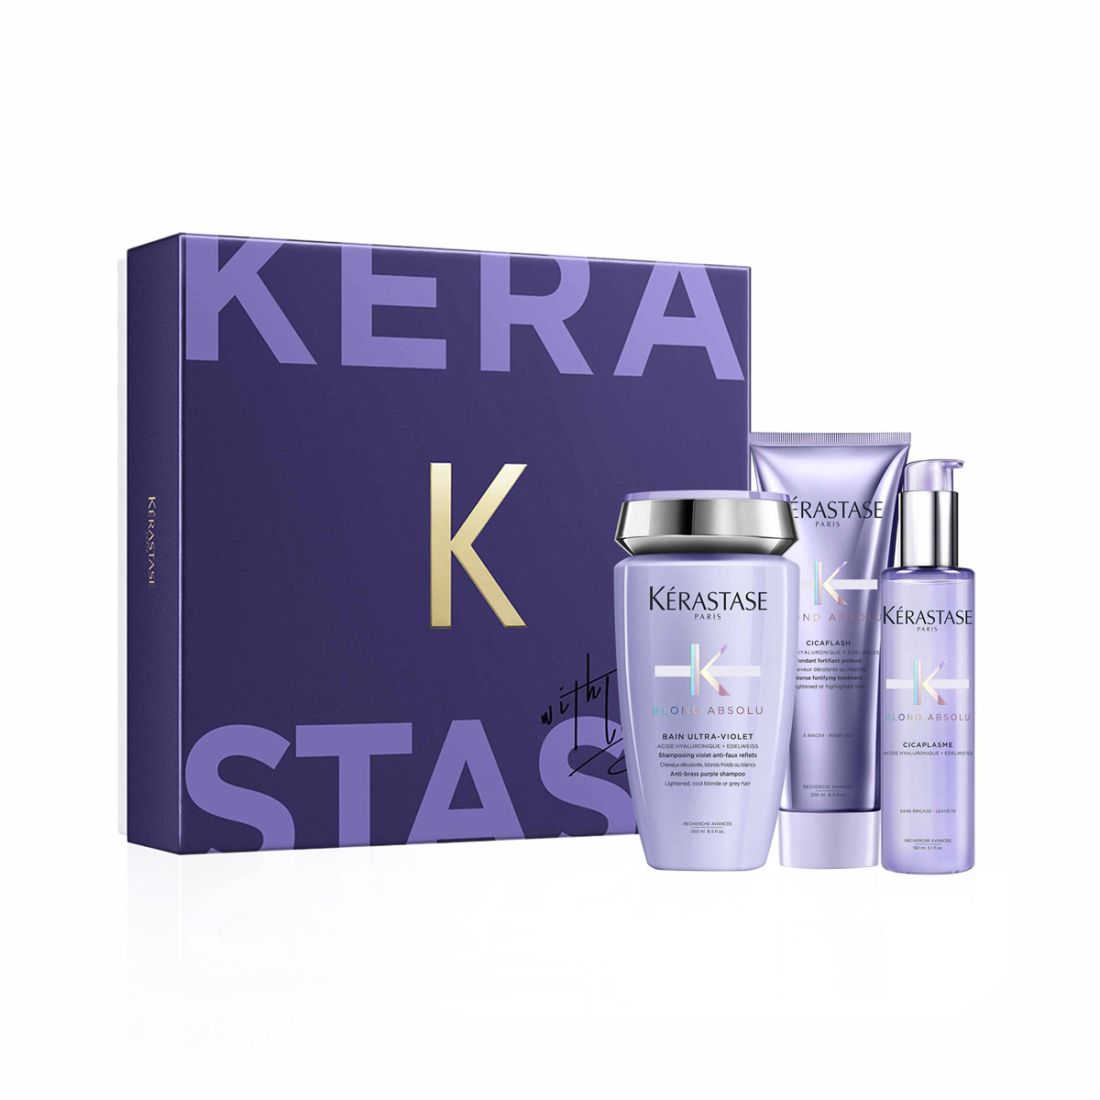 Kerastase Blond Absolu - Limited Edition Σετ Περιποίησης για Ξανοιγμένα Μαλλιά (Bain Ultra-Violet 250ml, Cicaflash 250ml, Cicaplasme 150ml)